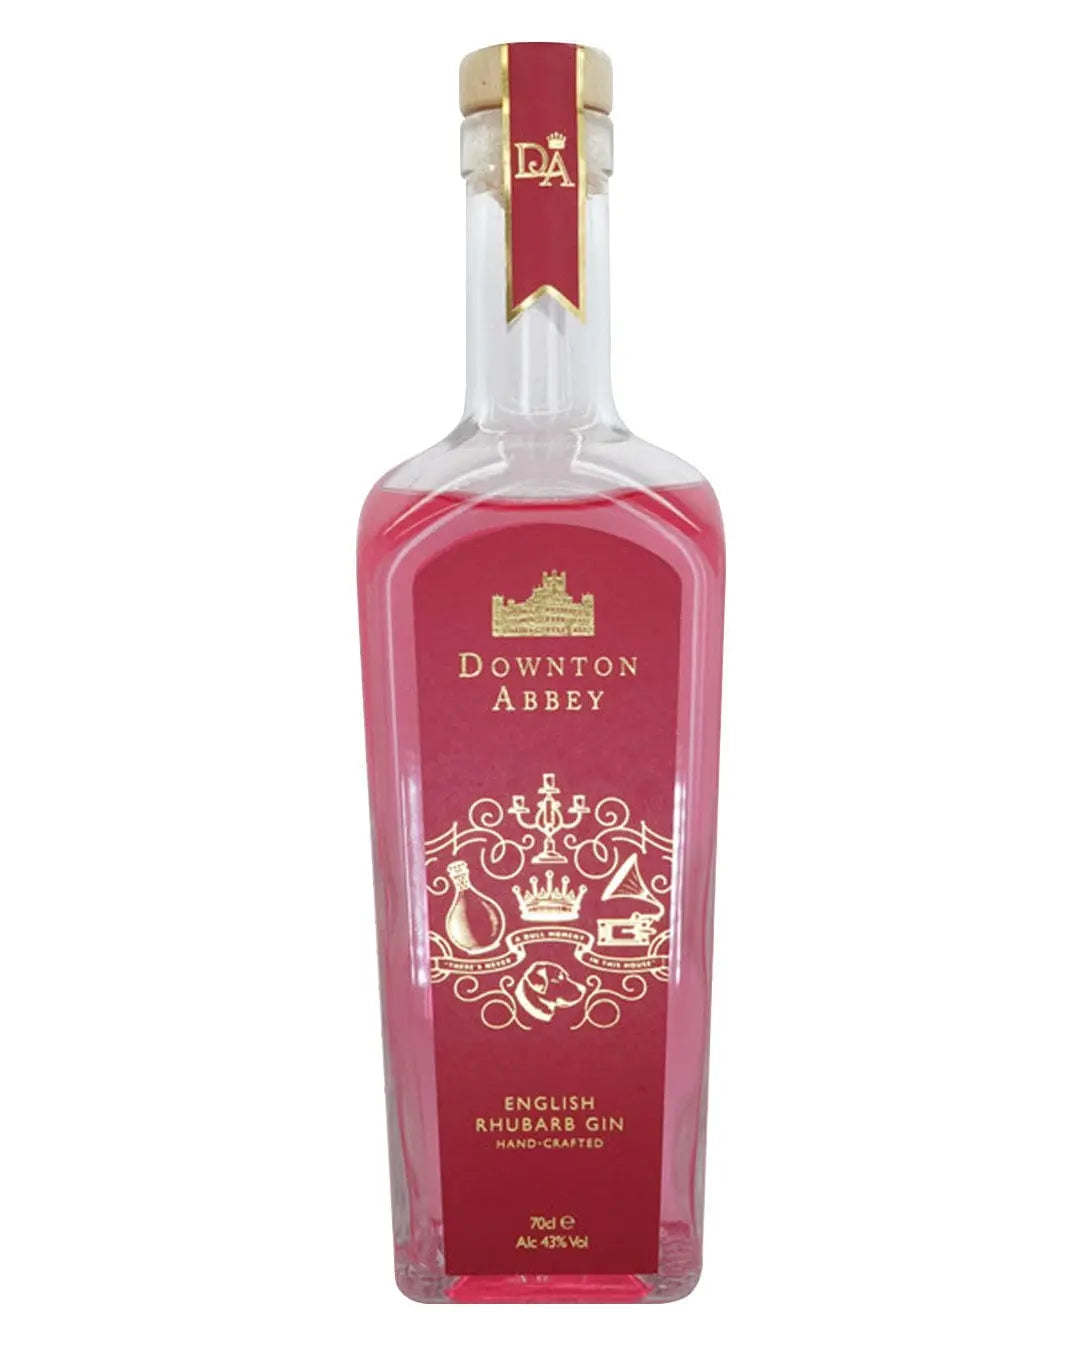 Downton Abbey Rhubarb Gin, 70 cl Gin